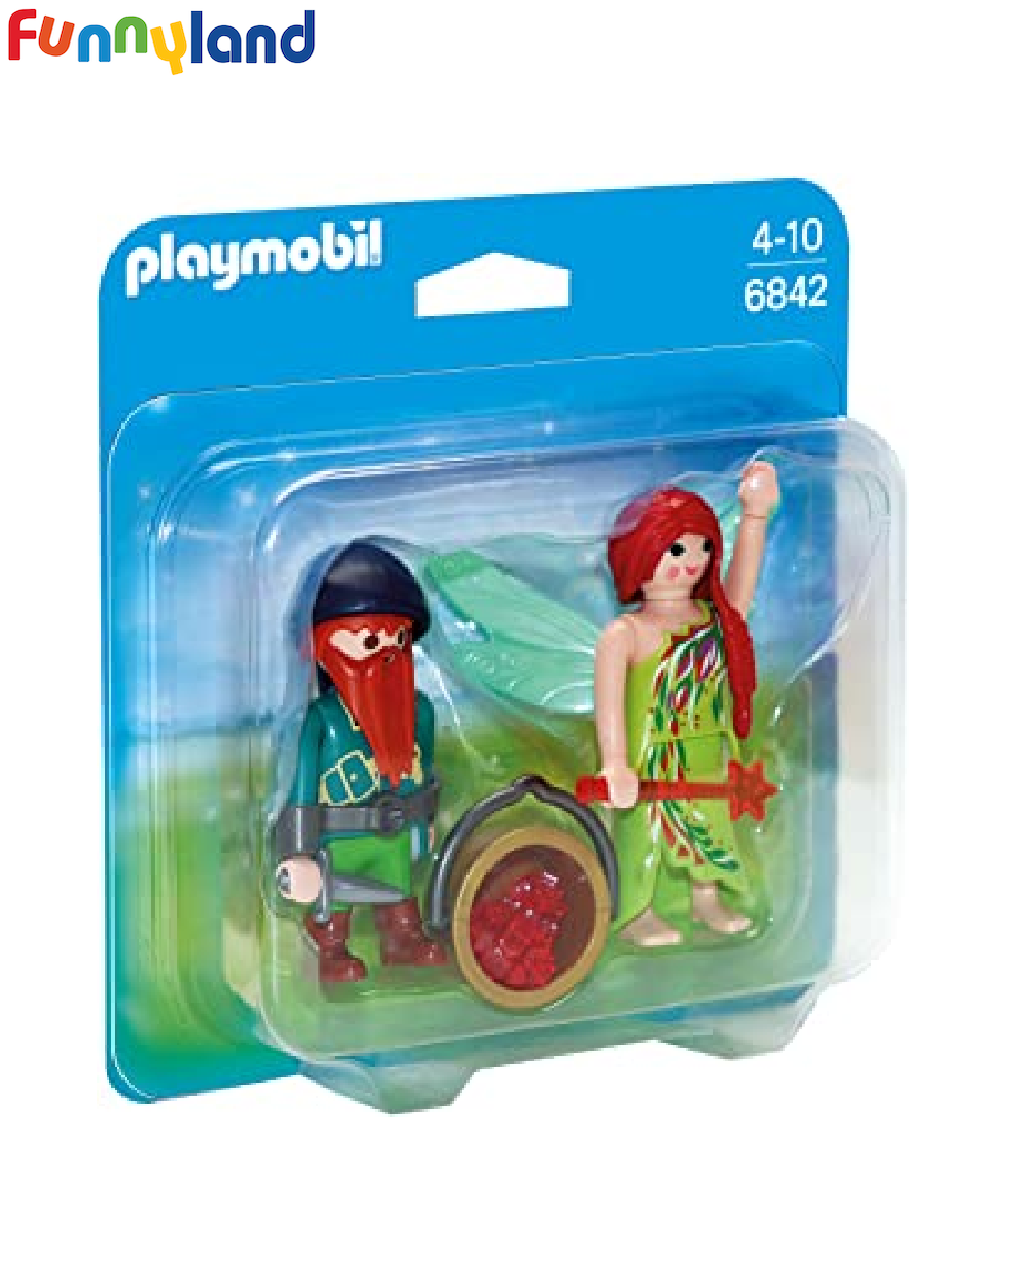 Đồ chơi nhập vai Playmobil Figures_Duo Pack 199 _ Funnyland